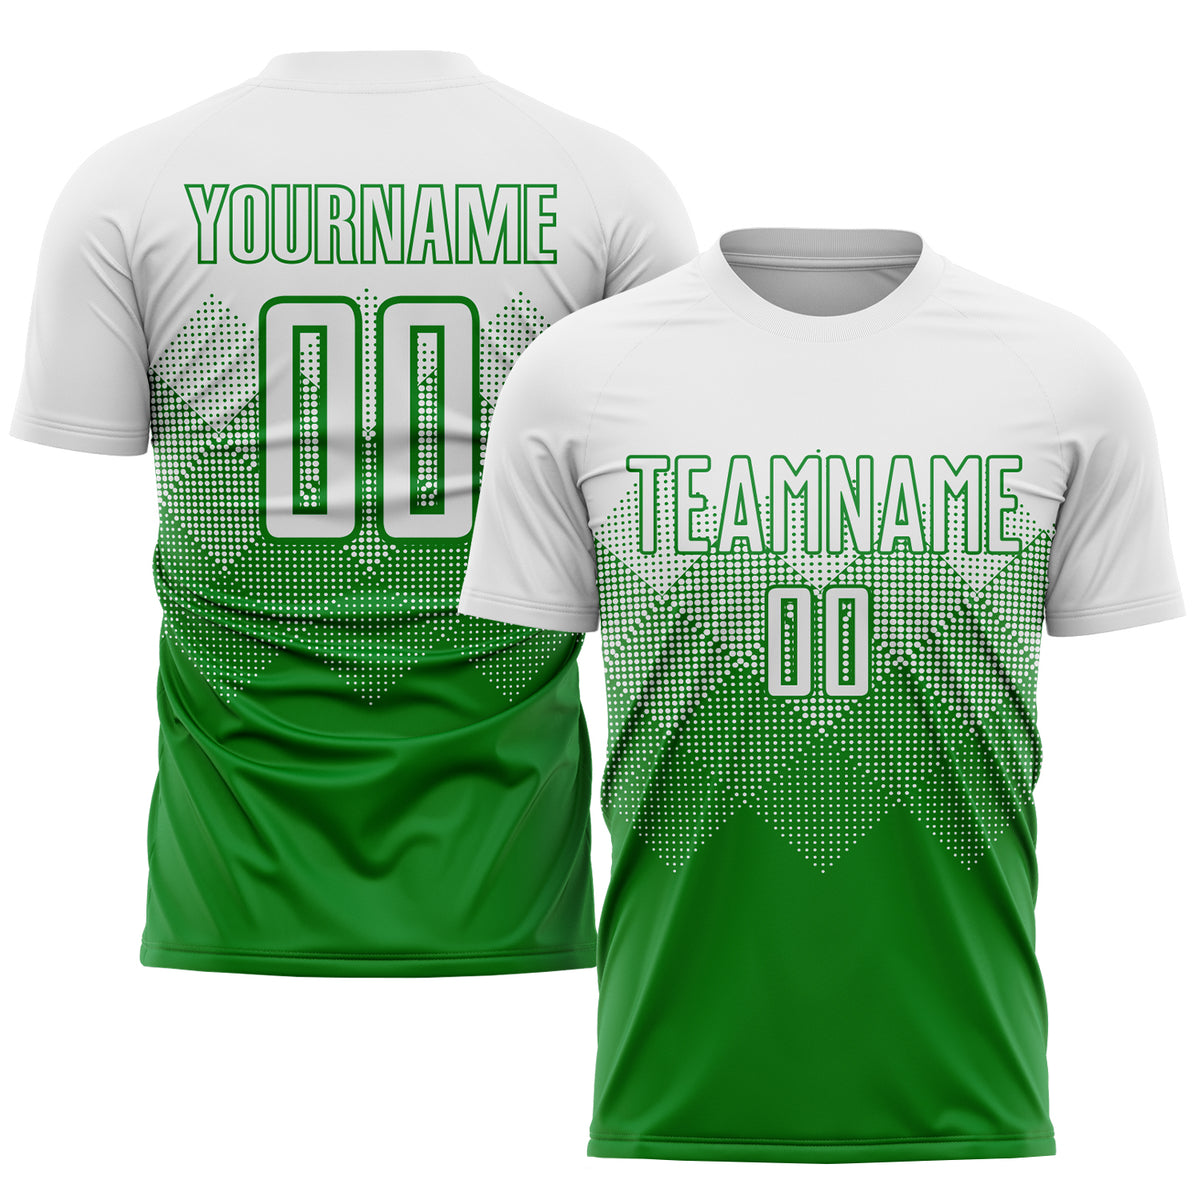 Coolest Soccer Jerseys - Green/White Flexible, Cheap, Durable